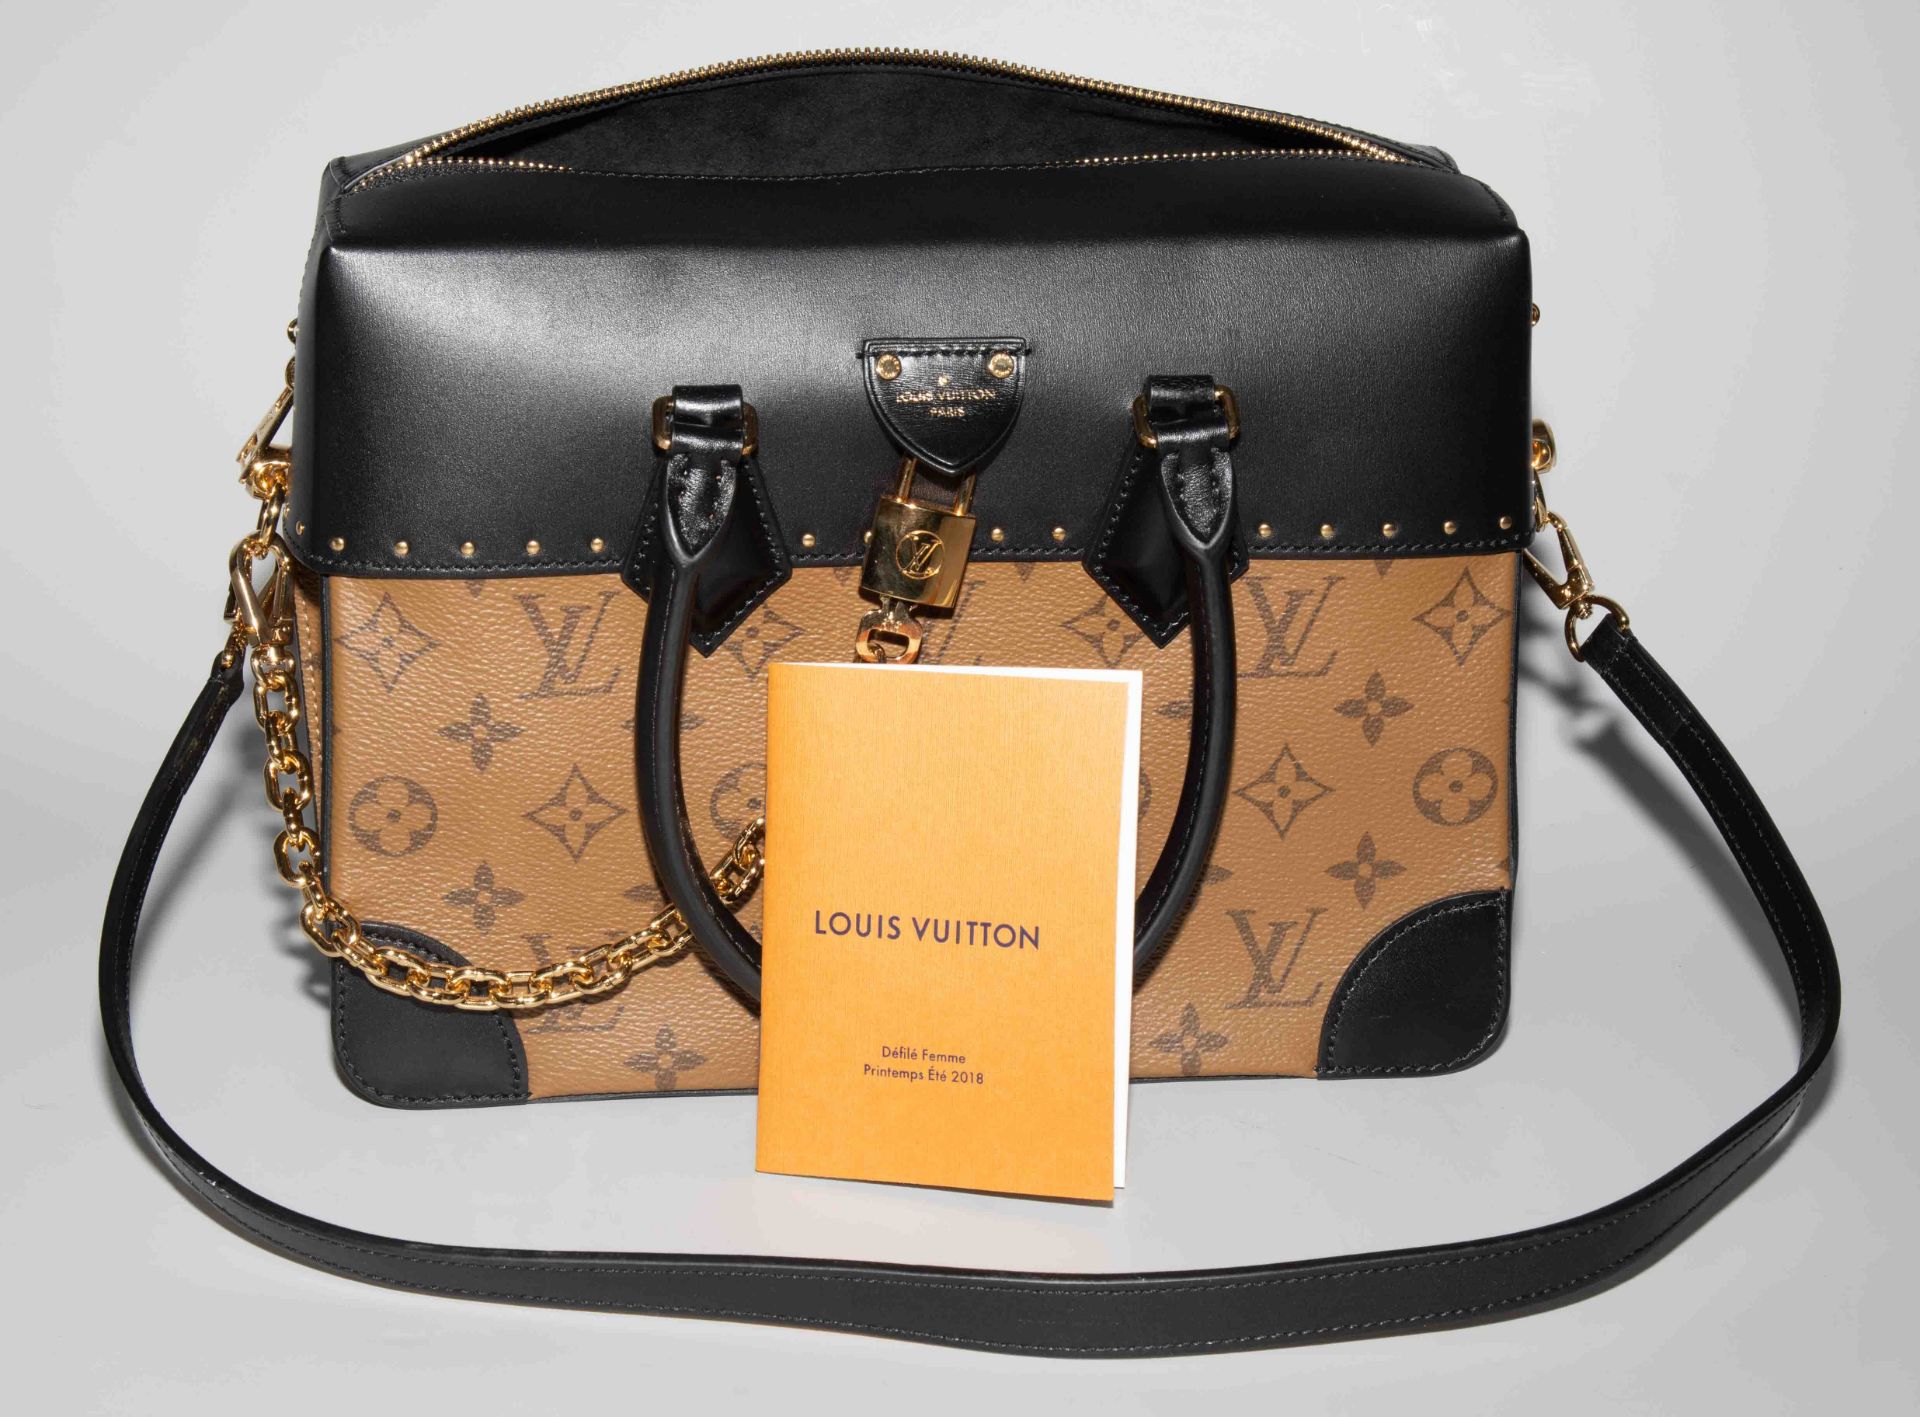 Louis Vuitton, Handtasche "City Malle" - Image 12 of 14